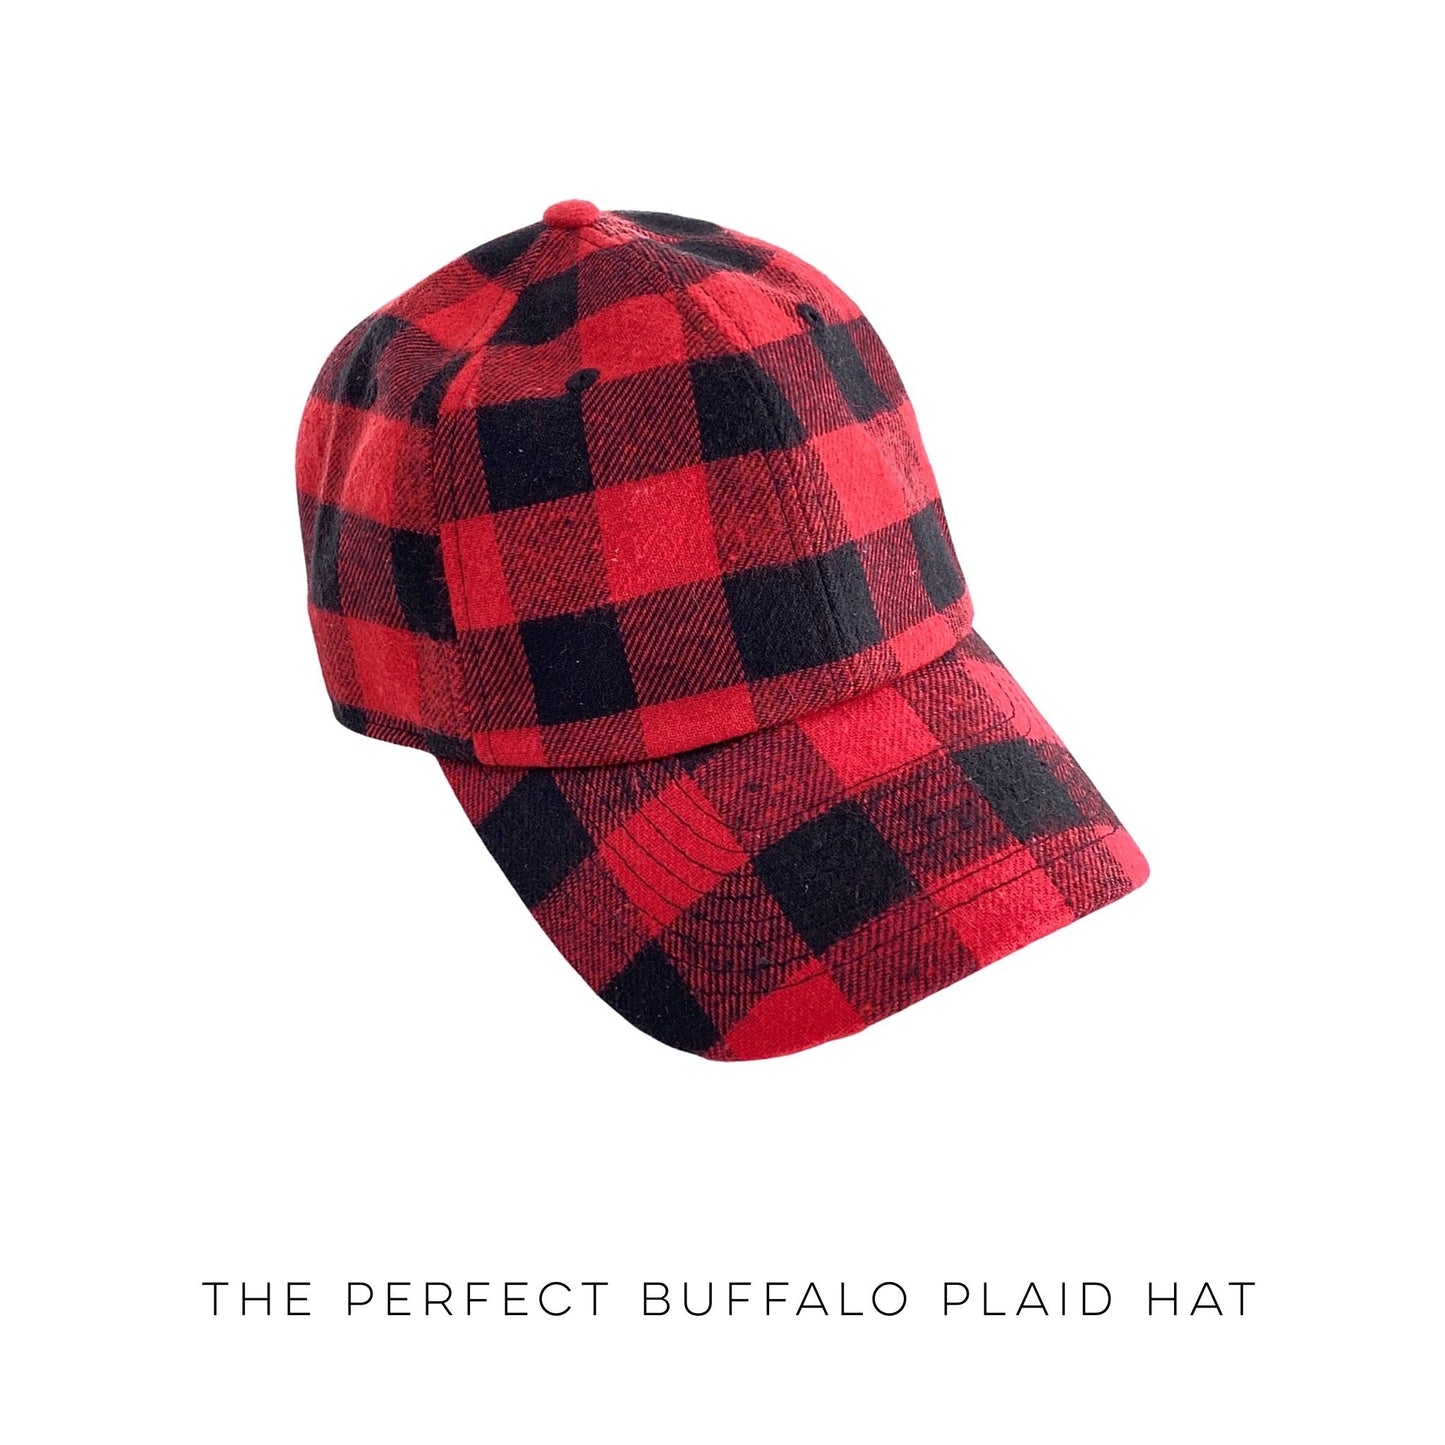 The Perfect Buffalo Plaid Hat!